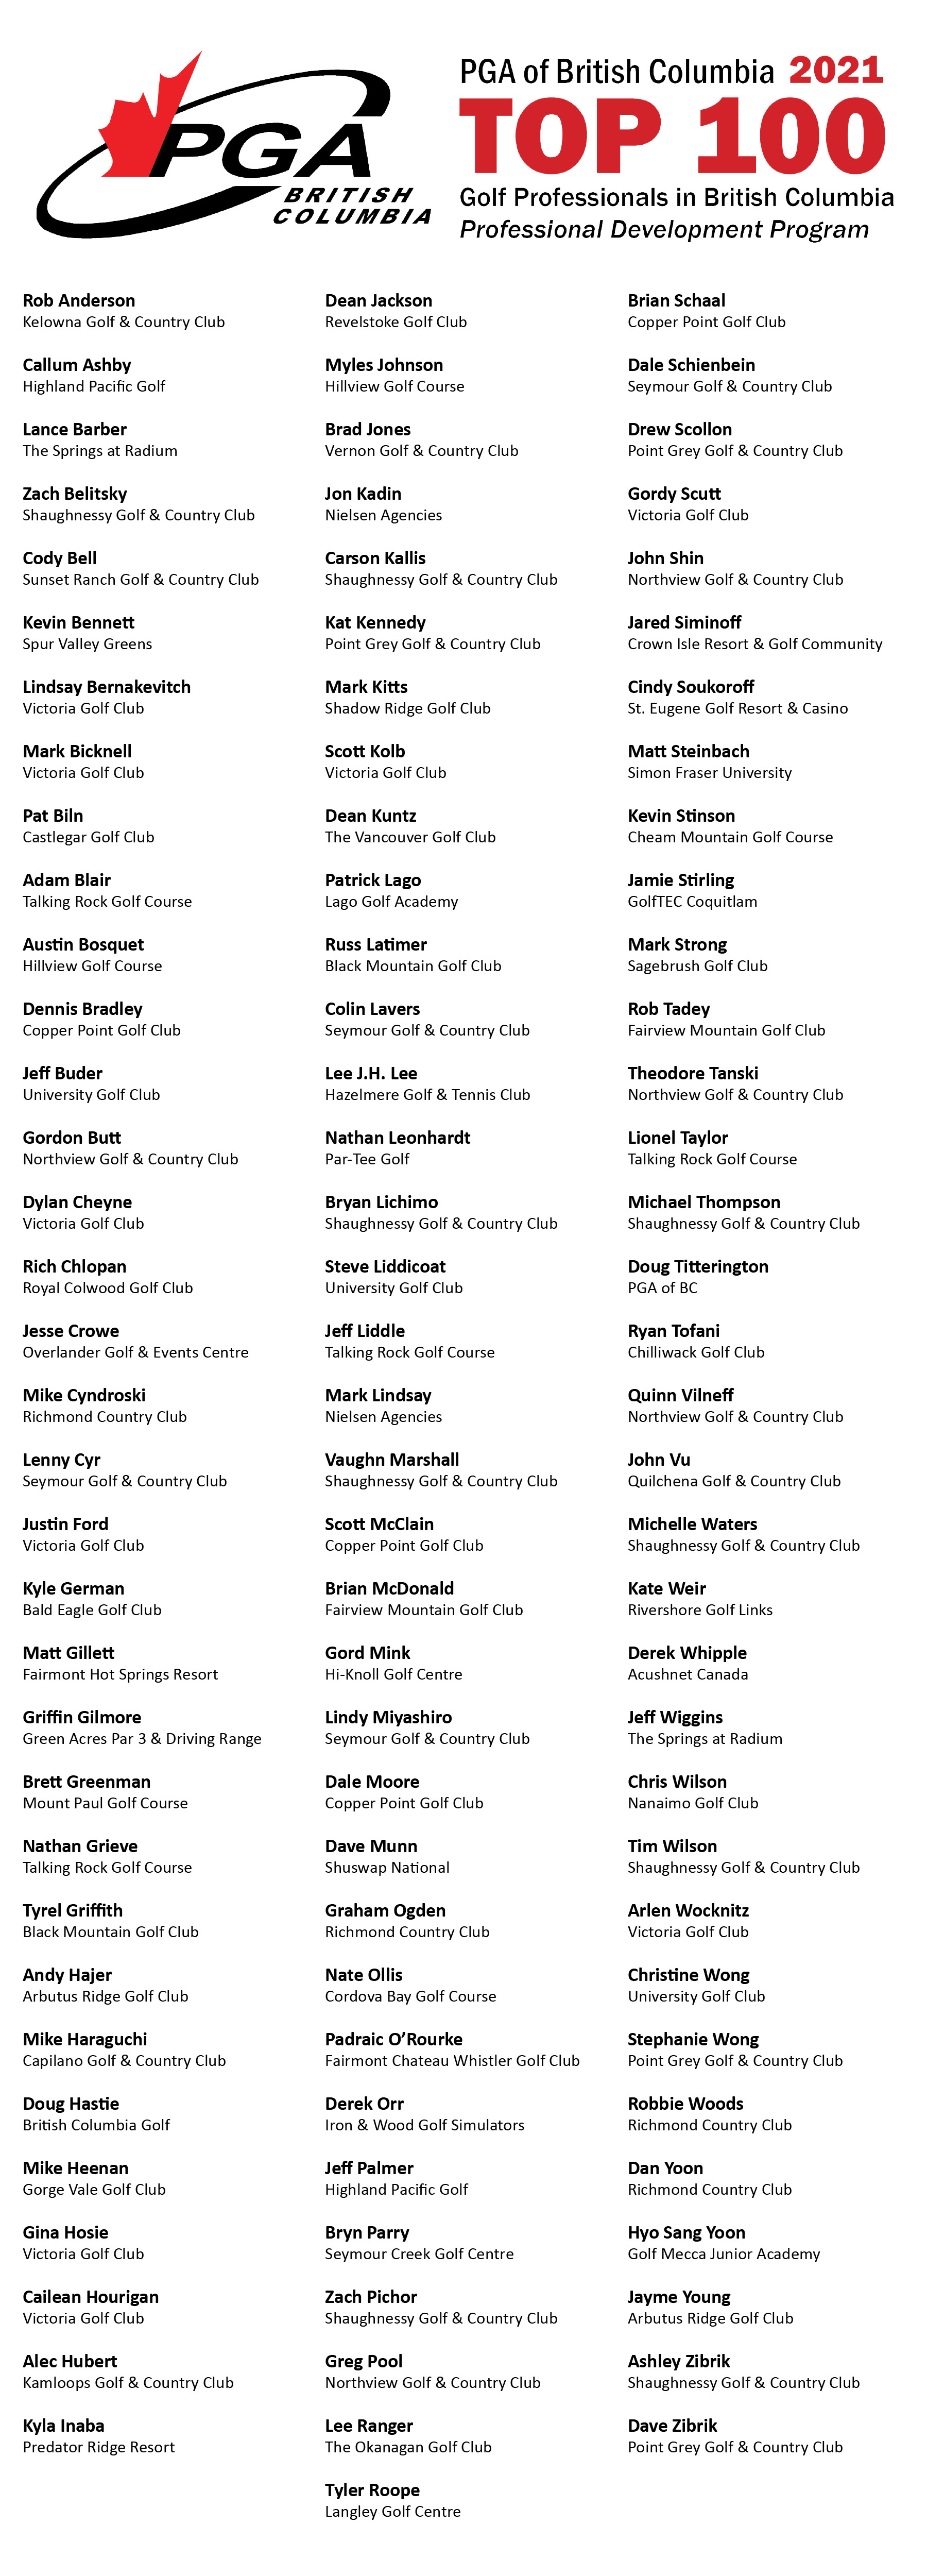 PGA of BC names Top 100 Golf Professionals of 2021 PGA of British